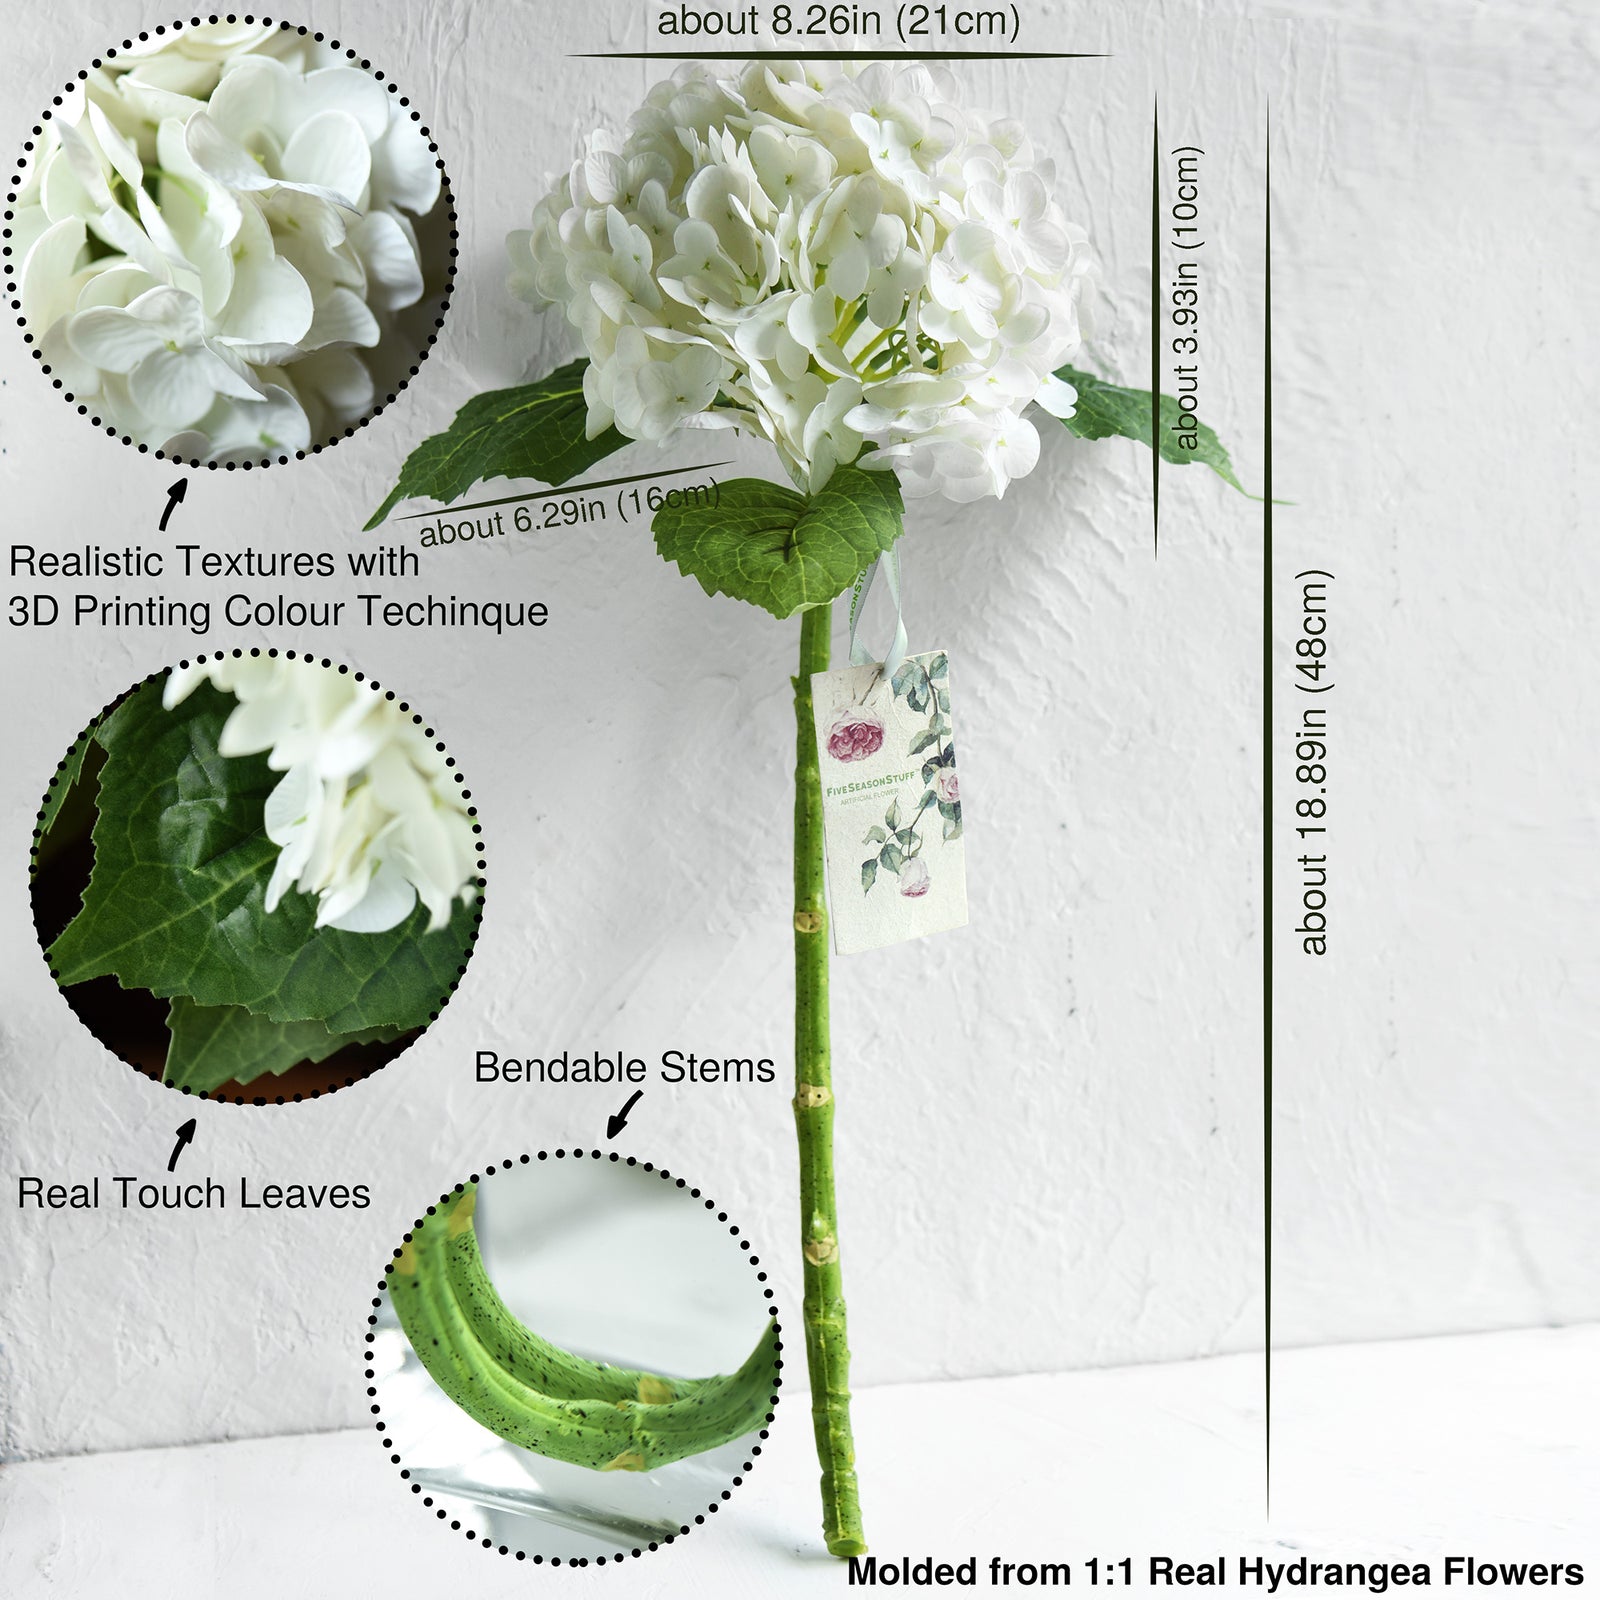 FiveSeasonStuff 2 Stems Real Touch Petals and Leaves Artificial Hydrangea Flowers Long Stem Floral Arrangement | for Wedding Bridal Party Home Décor DIY Floral Decoration (White)